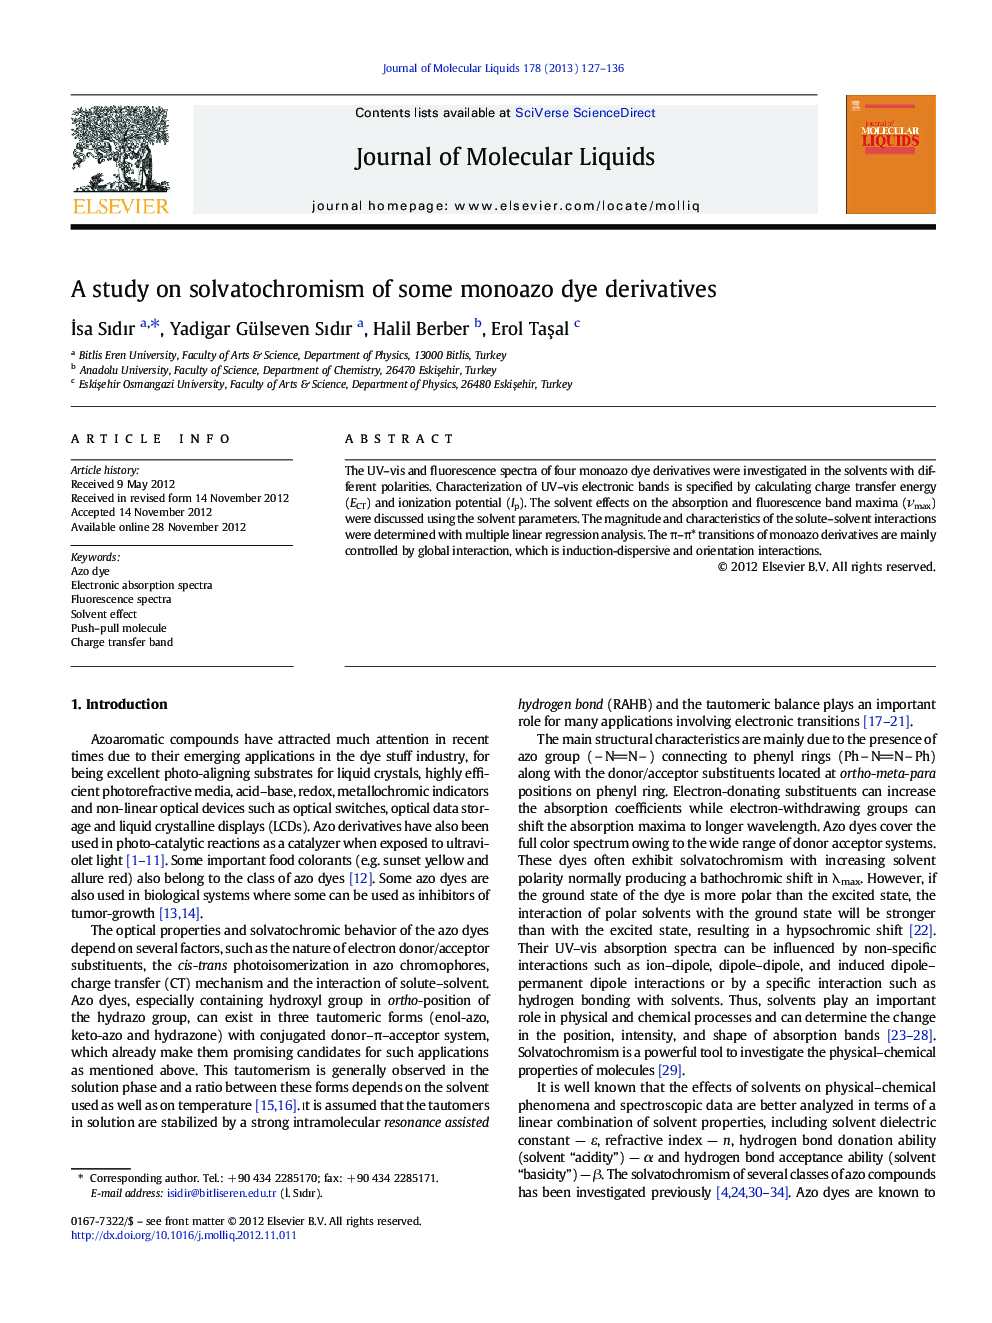 A study on solvatochromism of some monoazo dye derivatives